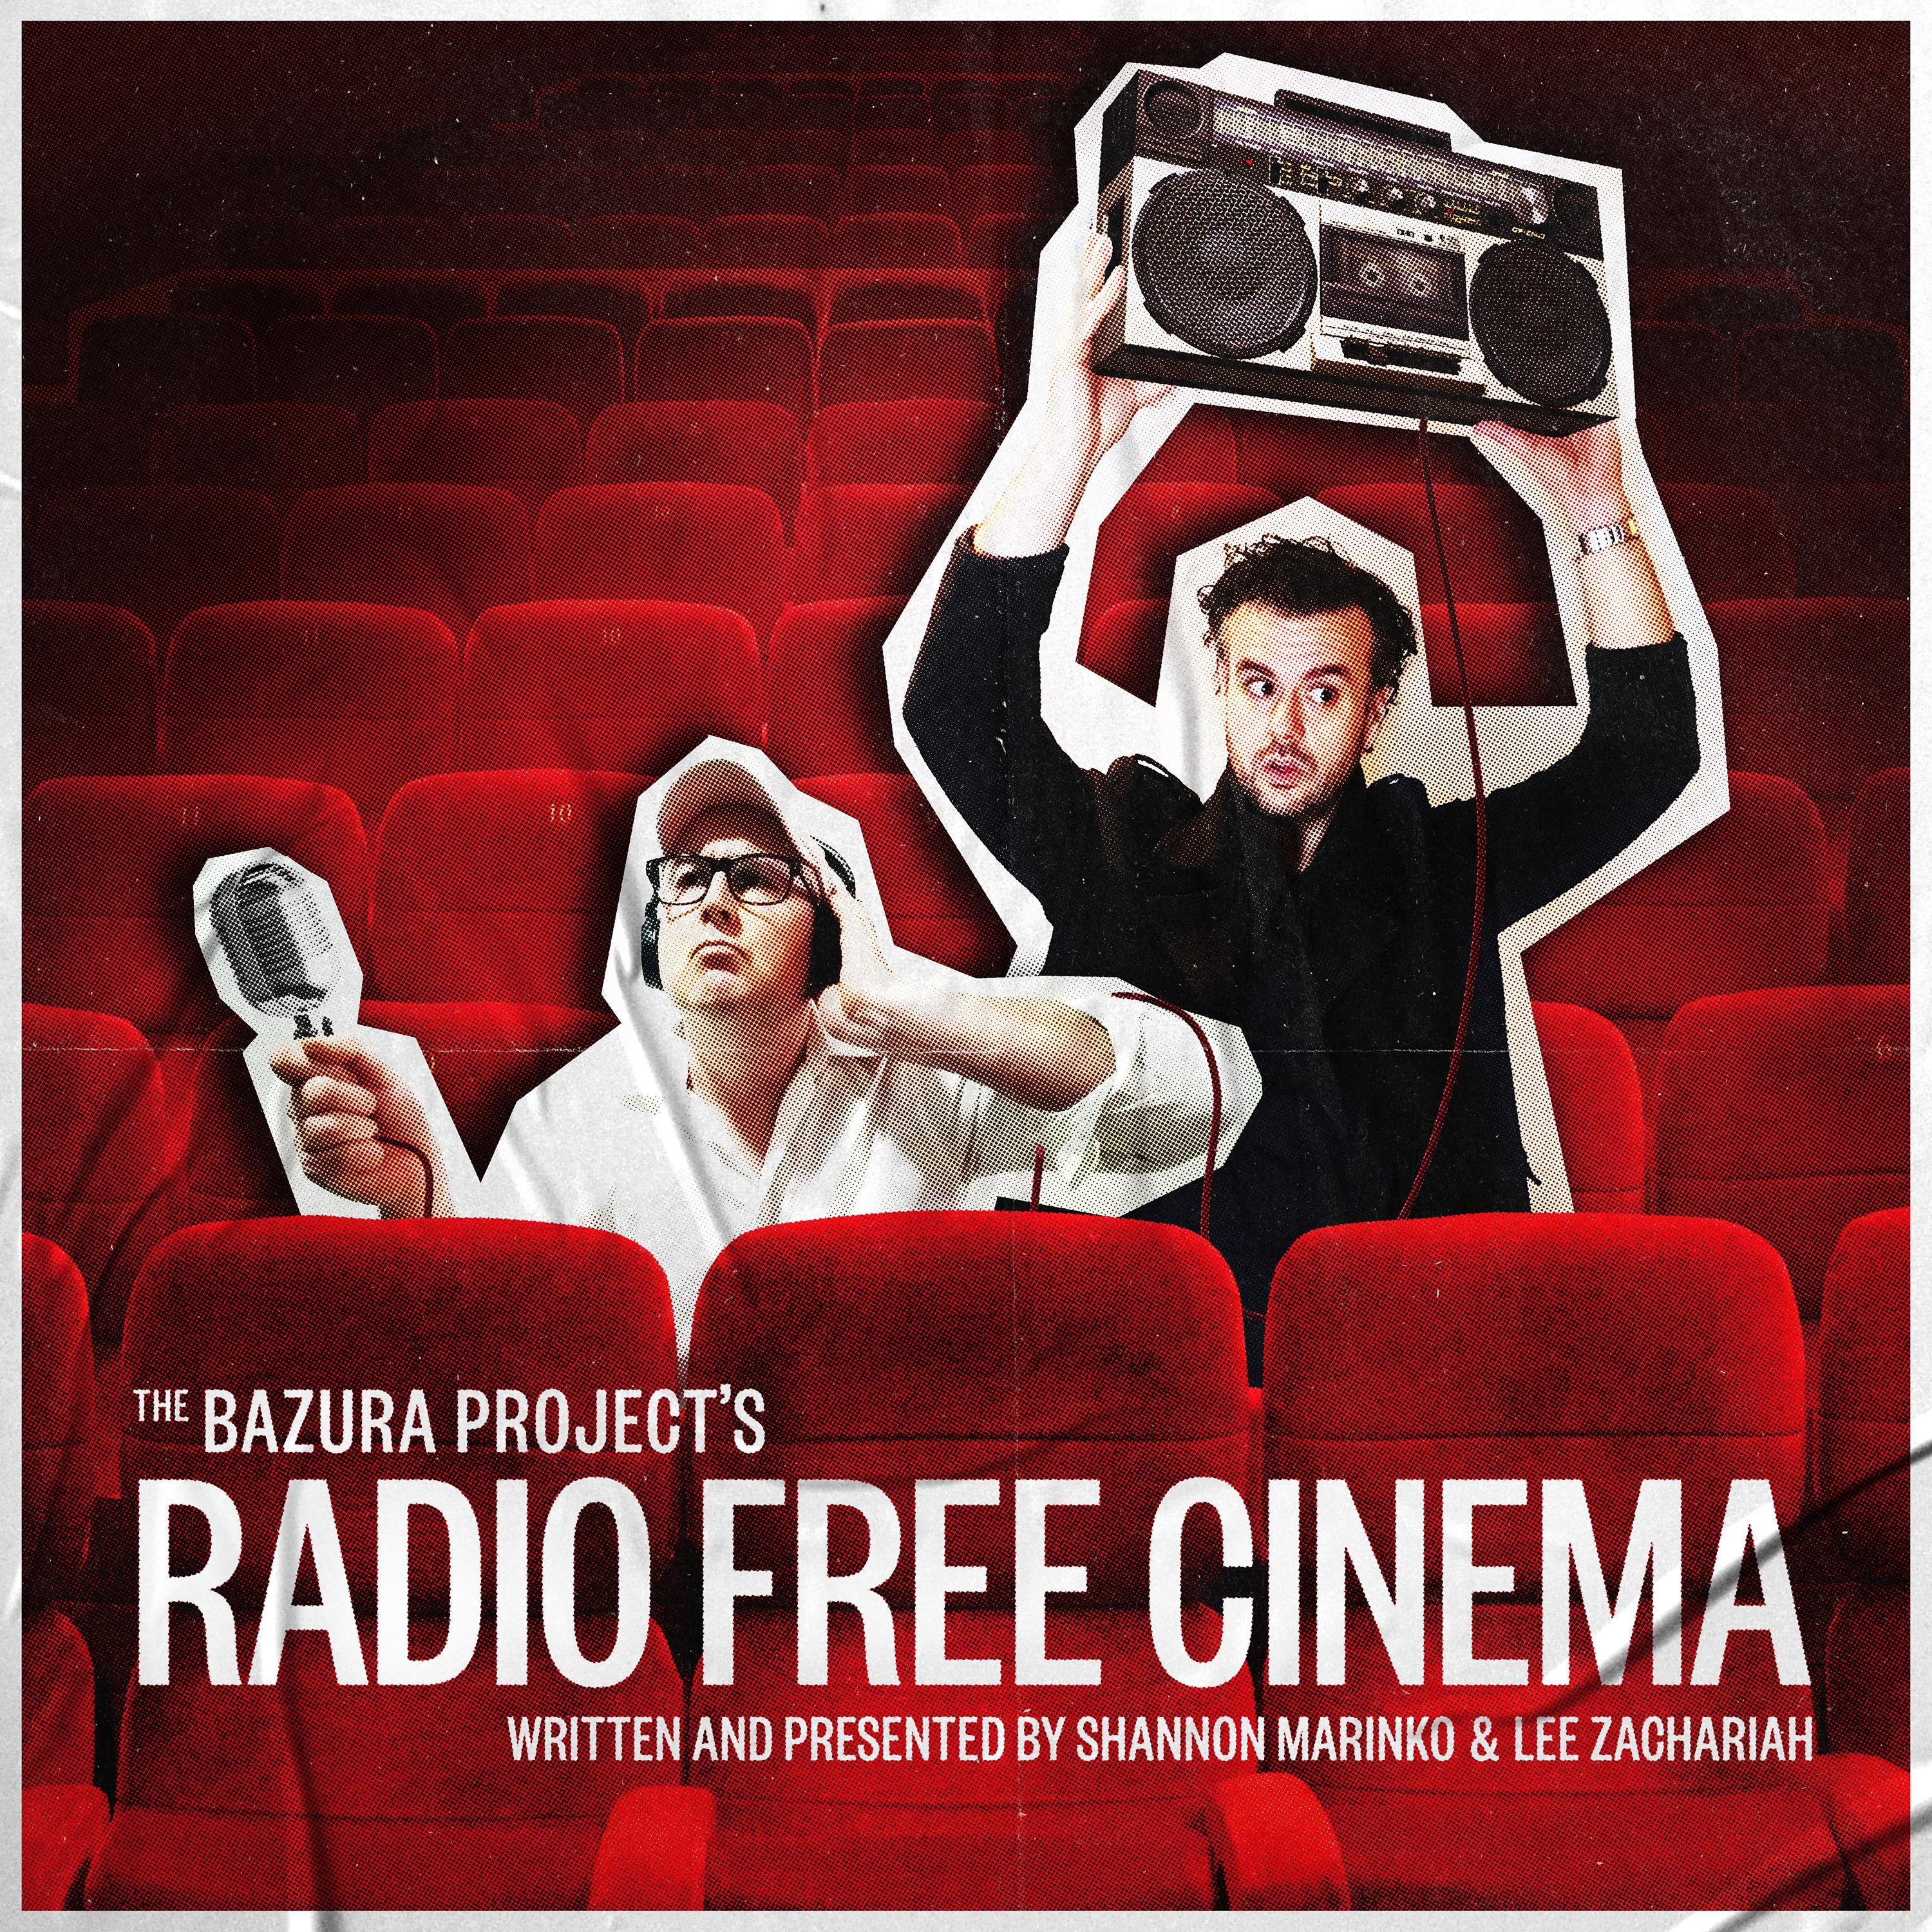 The Bazura Project's Radio Free Cinema